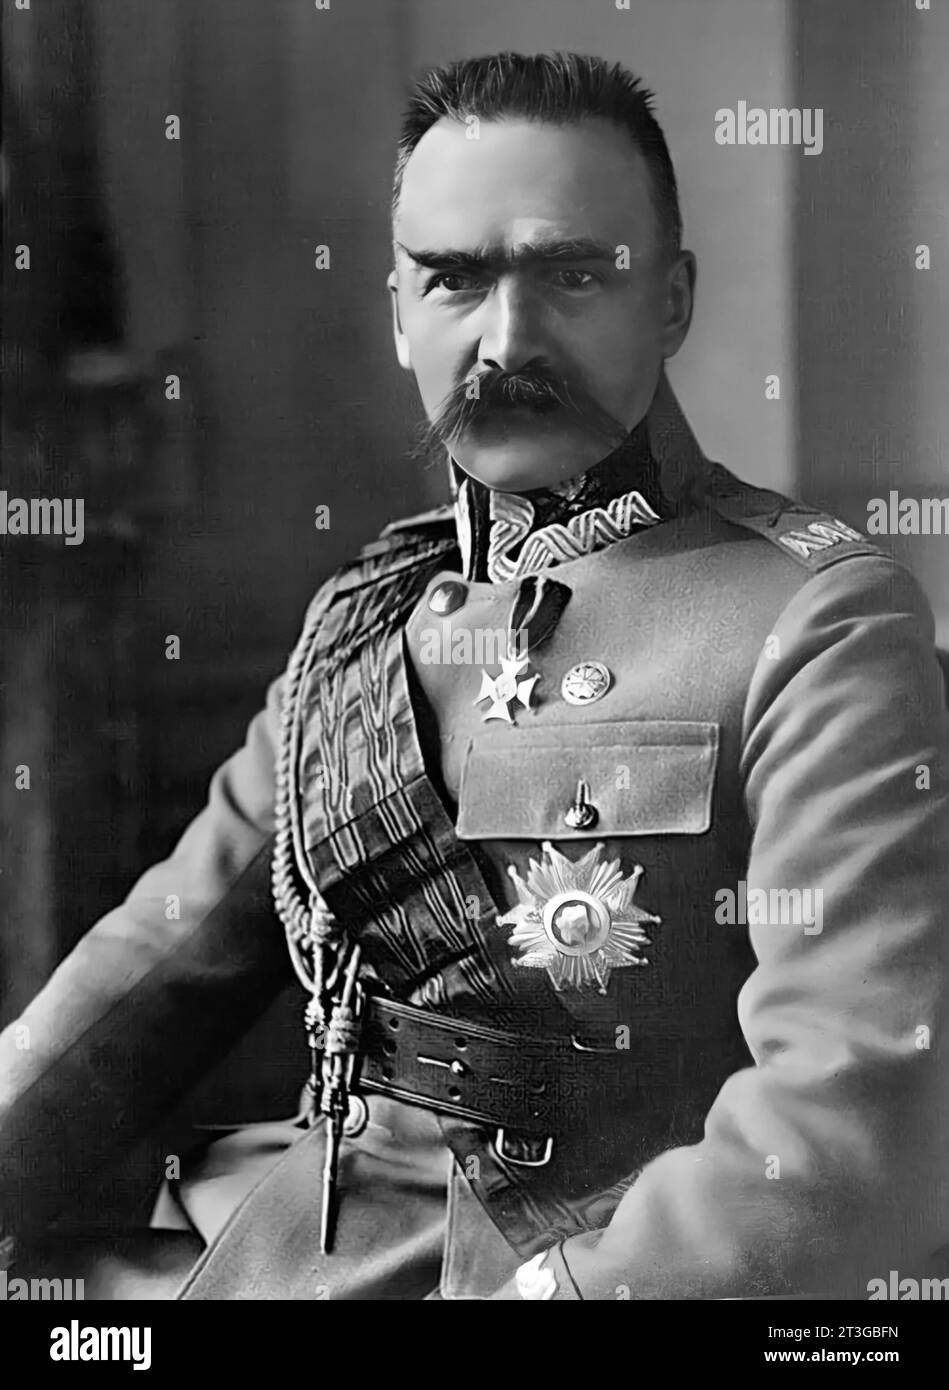 Józef Piłsudski. Ritratto dello statista polacco Józef Klemens Piłsudski (1867-1935) negli anni '1920 Foto Stock